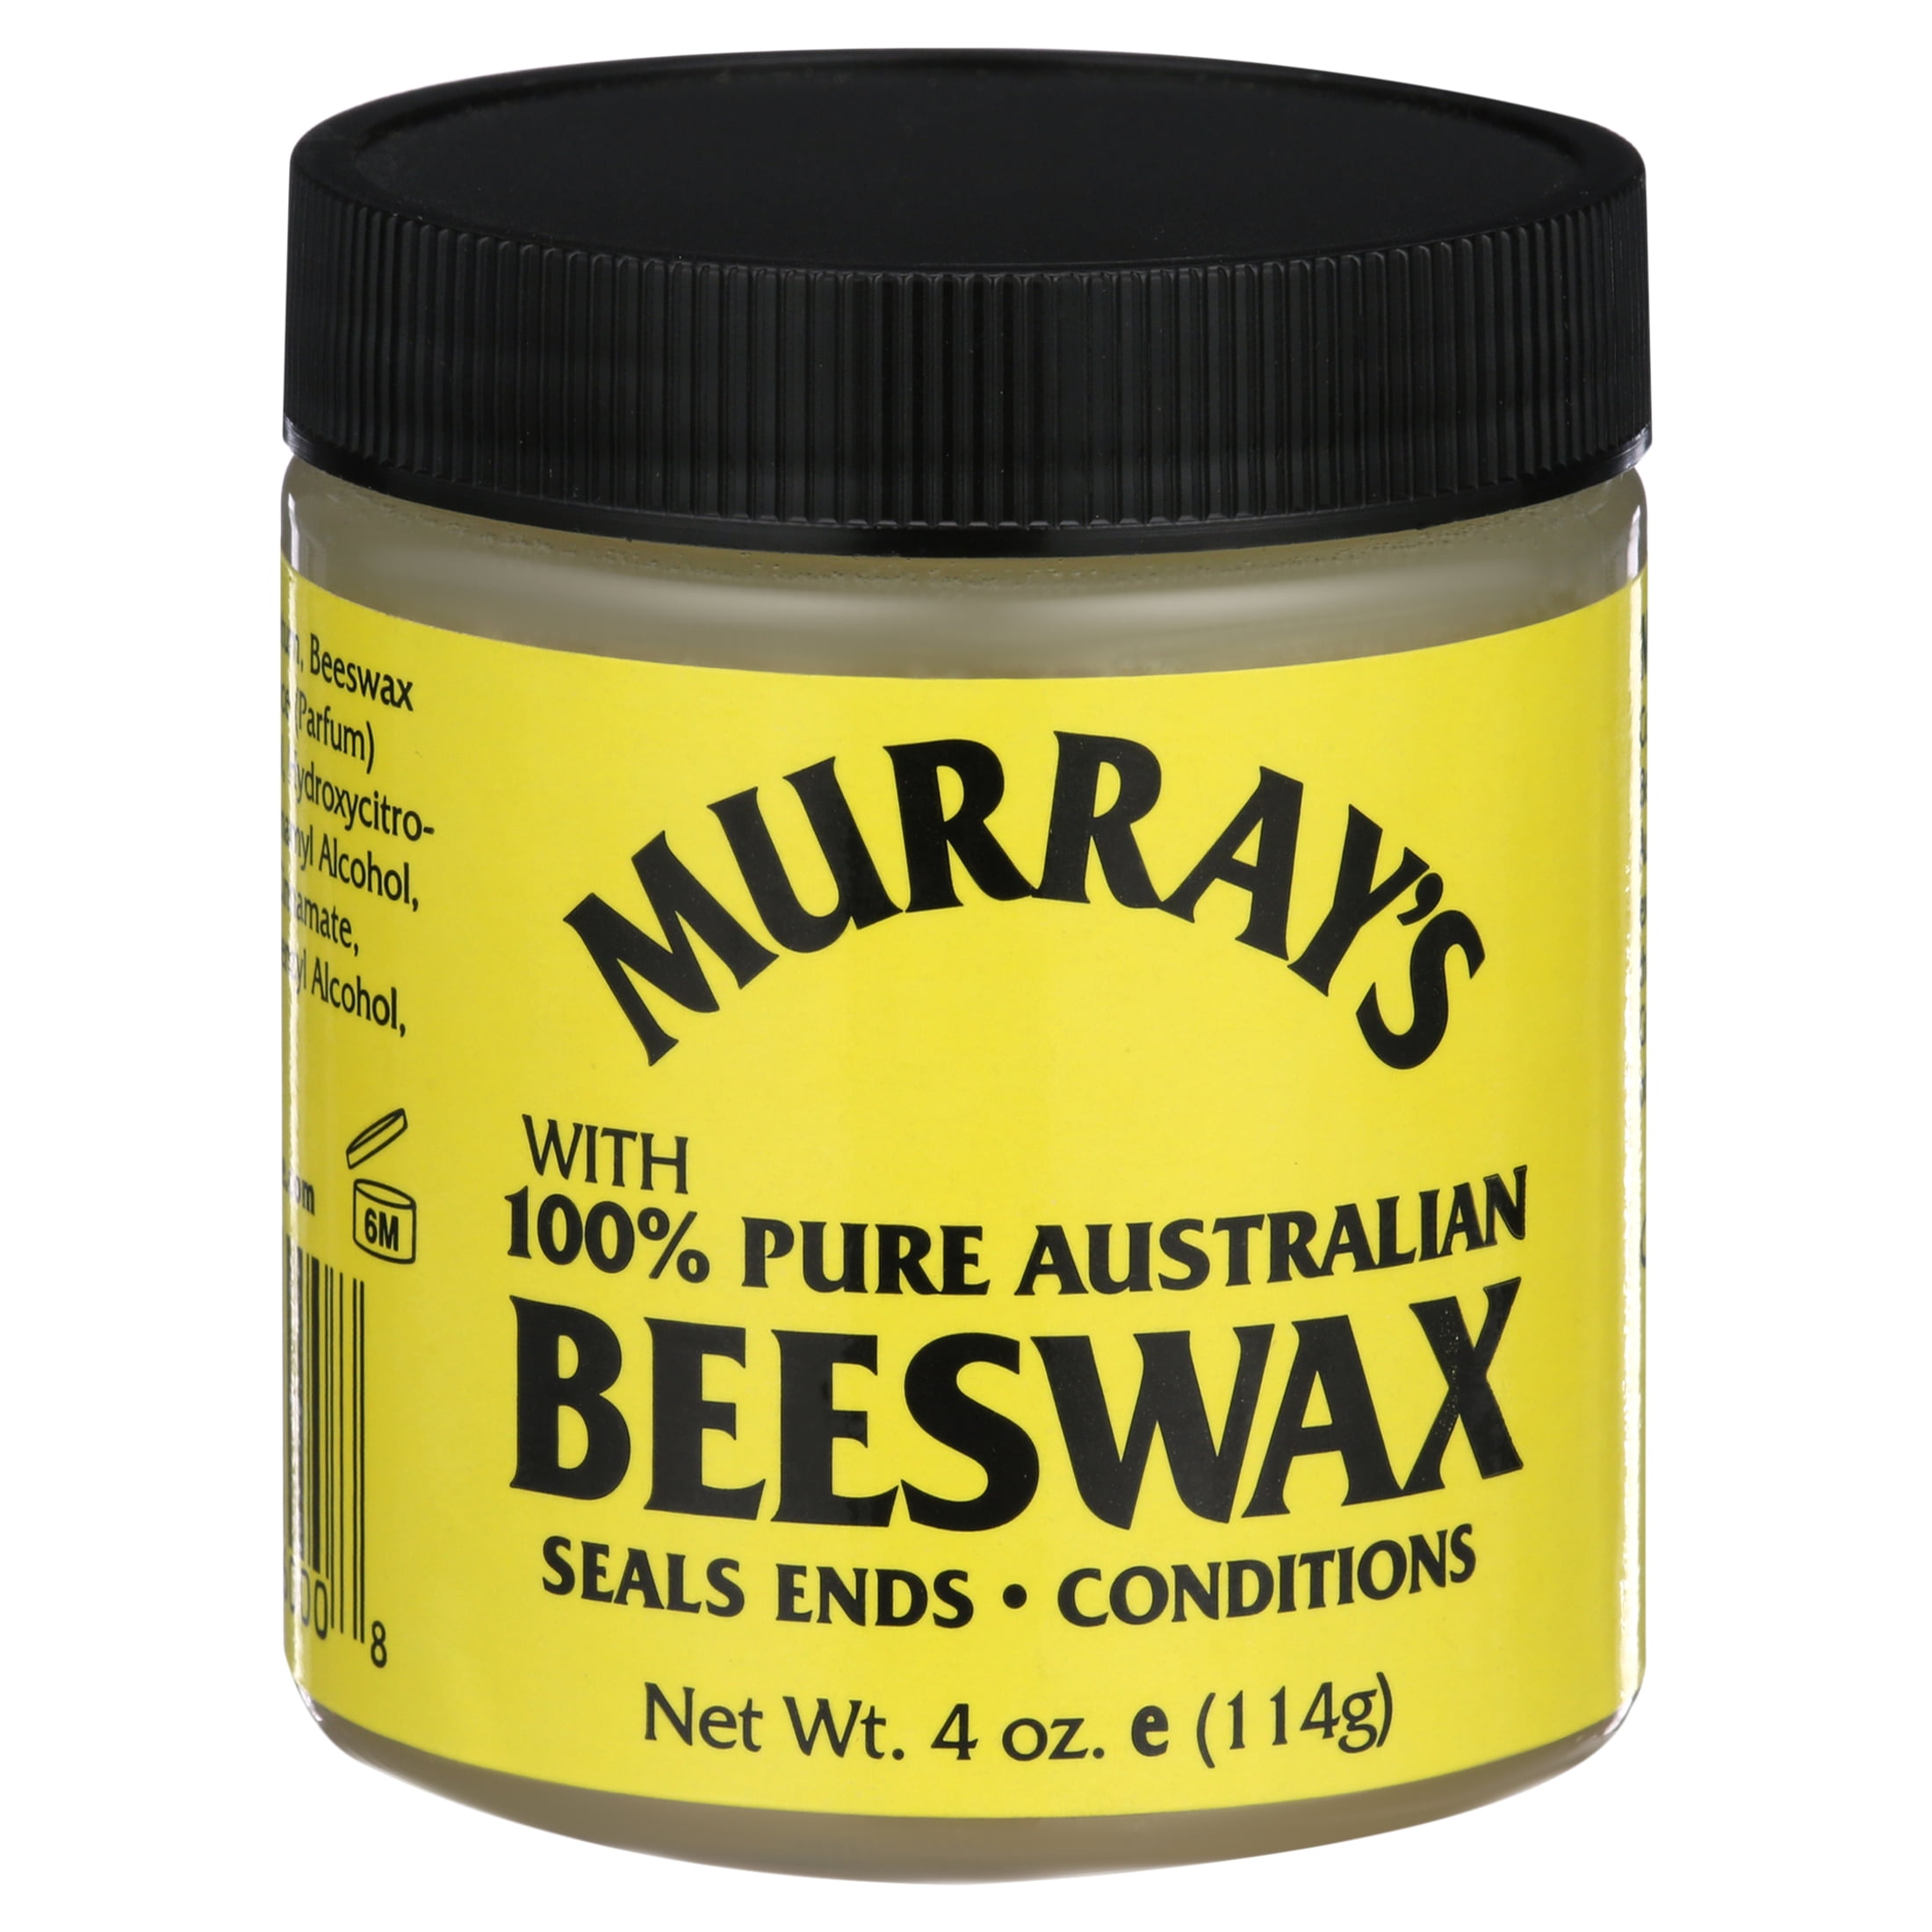  Murrays 100% Pure Australian Beeswax 4 Oz. (Pack of 2